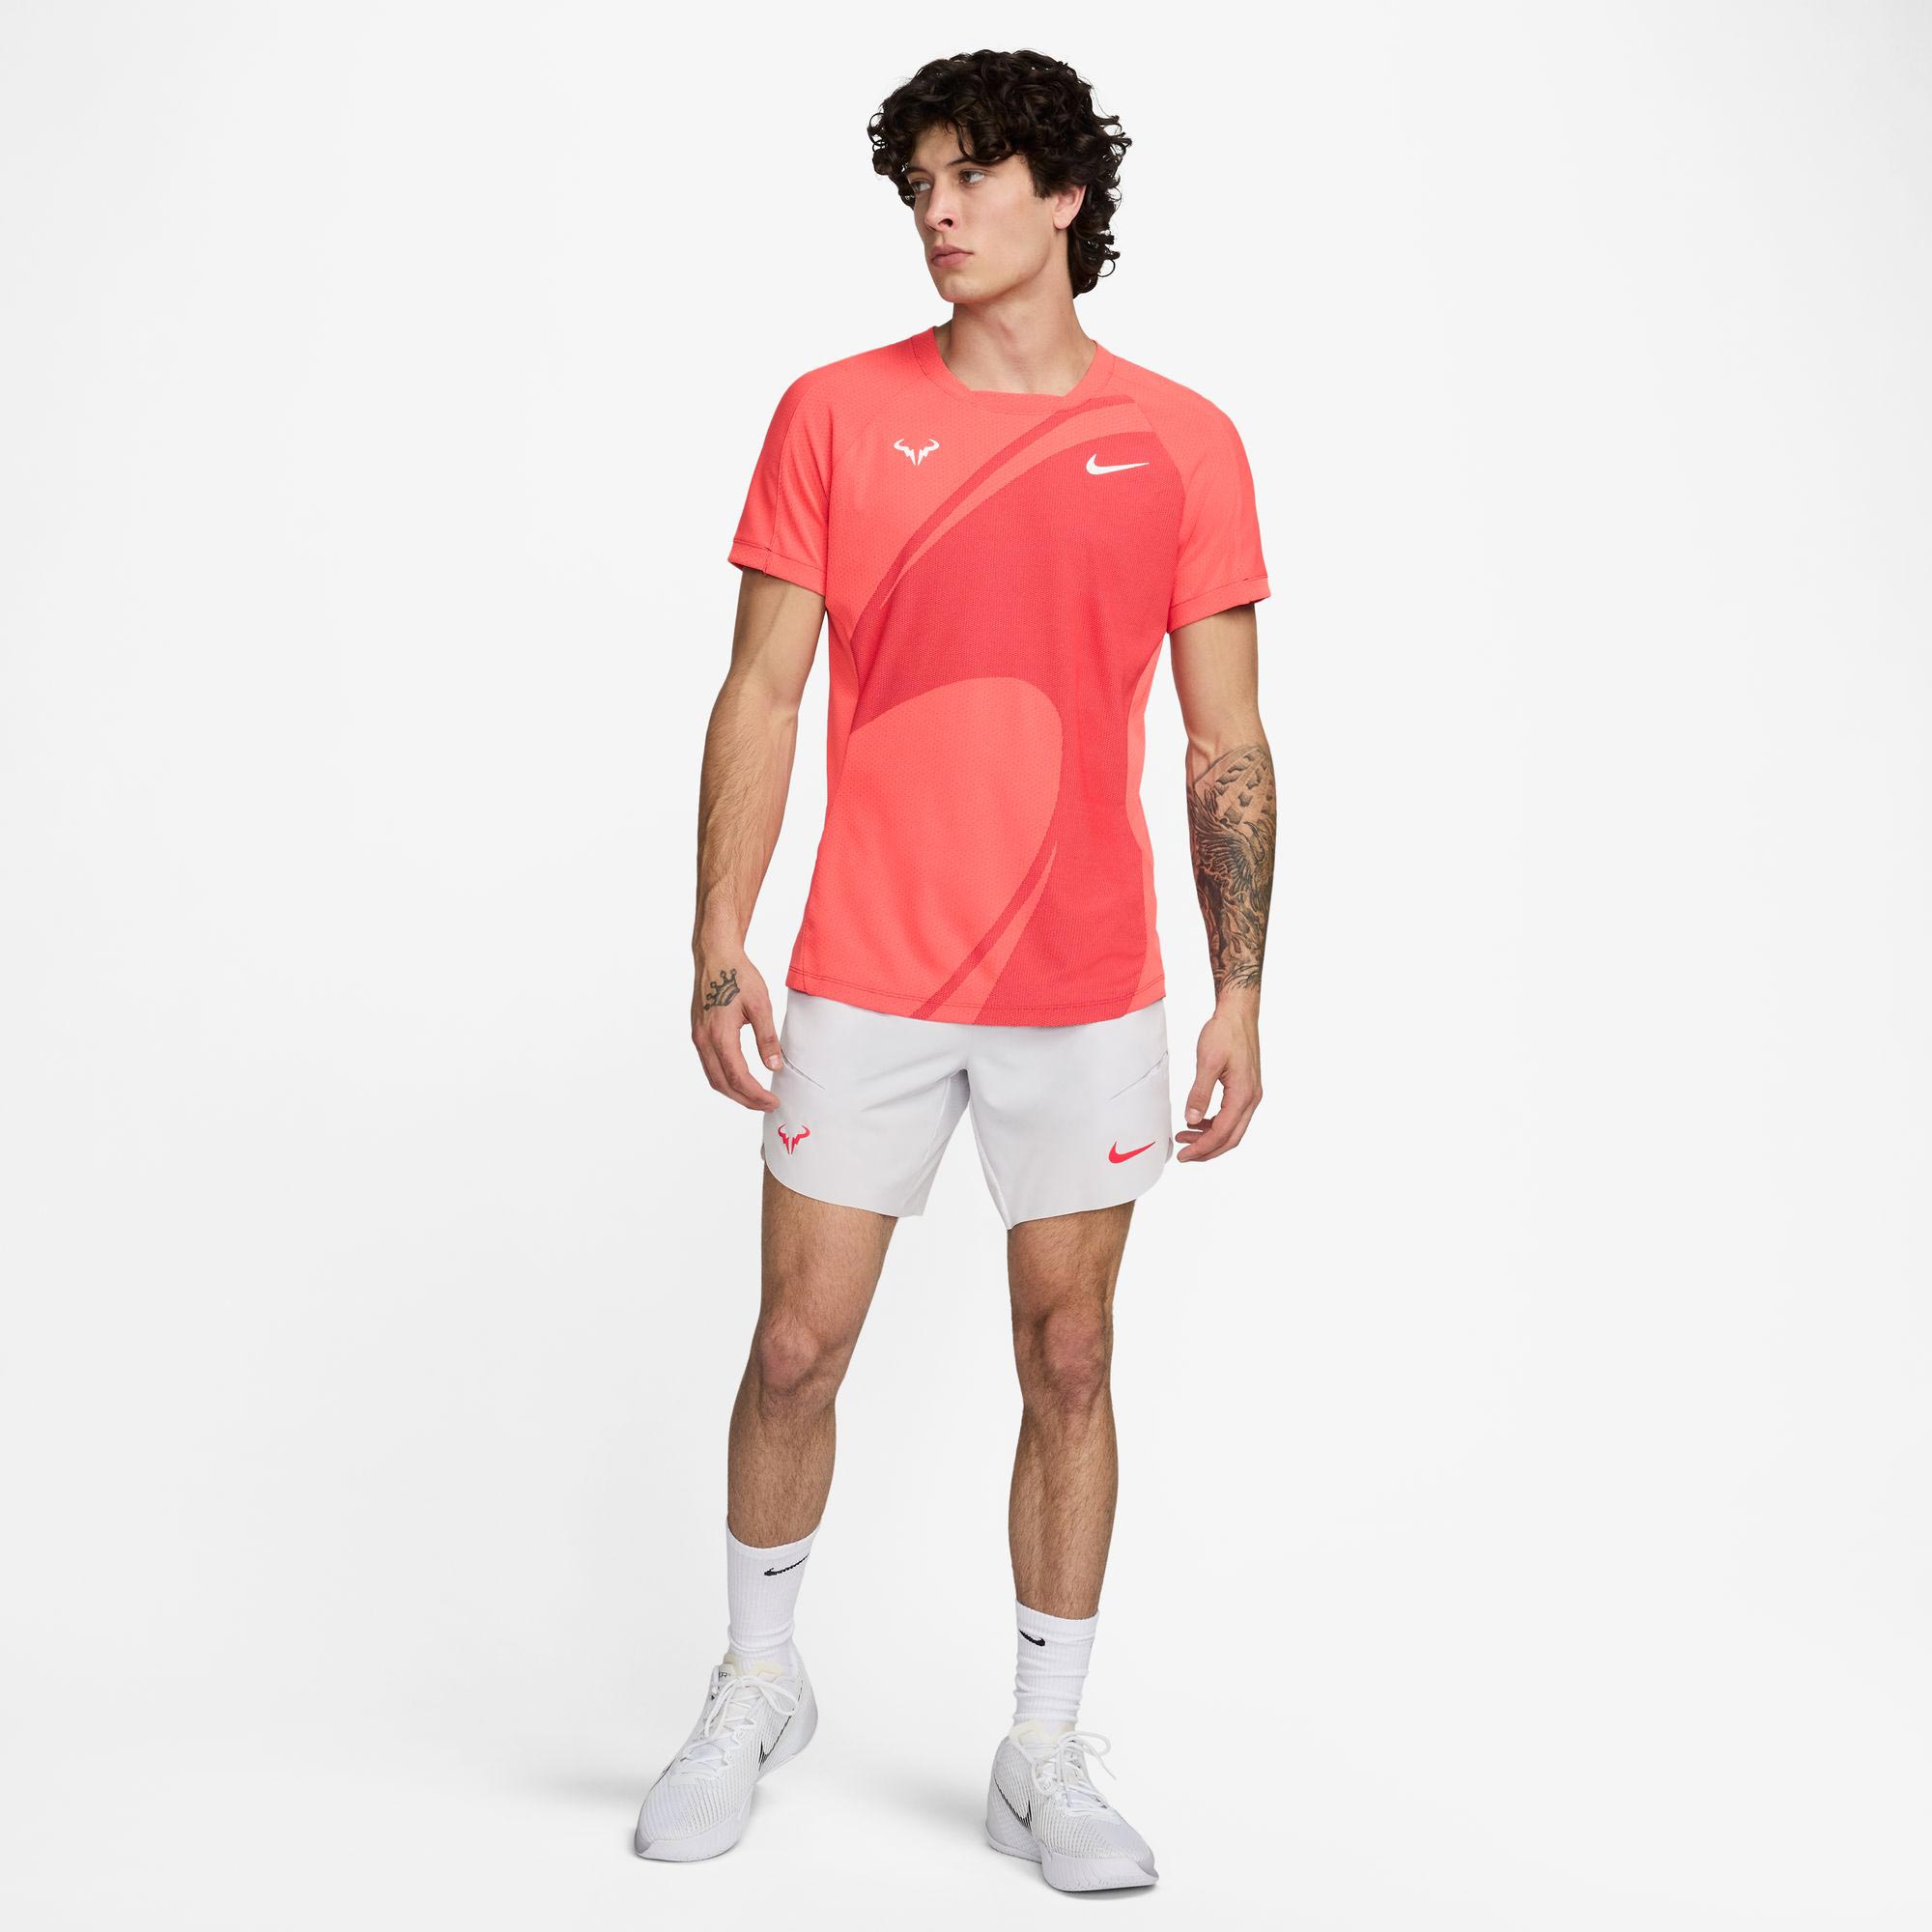 Nike Rafa Men's Dri-FIT ADV Tennis Shirt - Red (6)